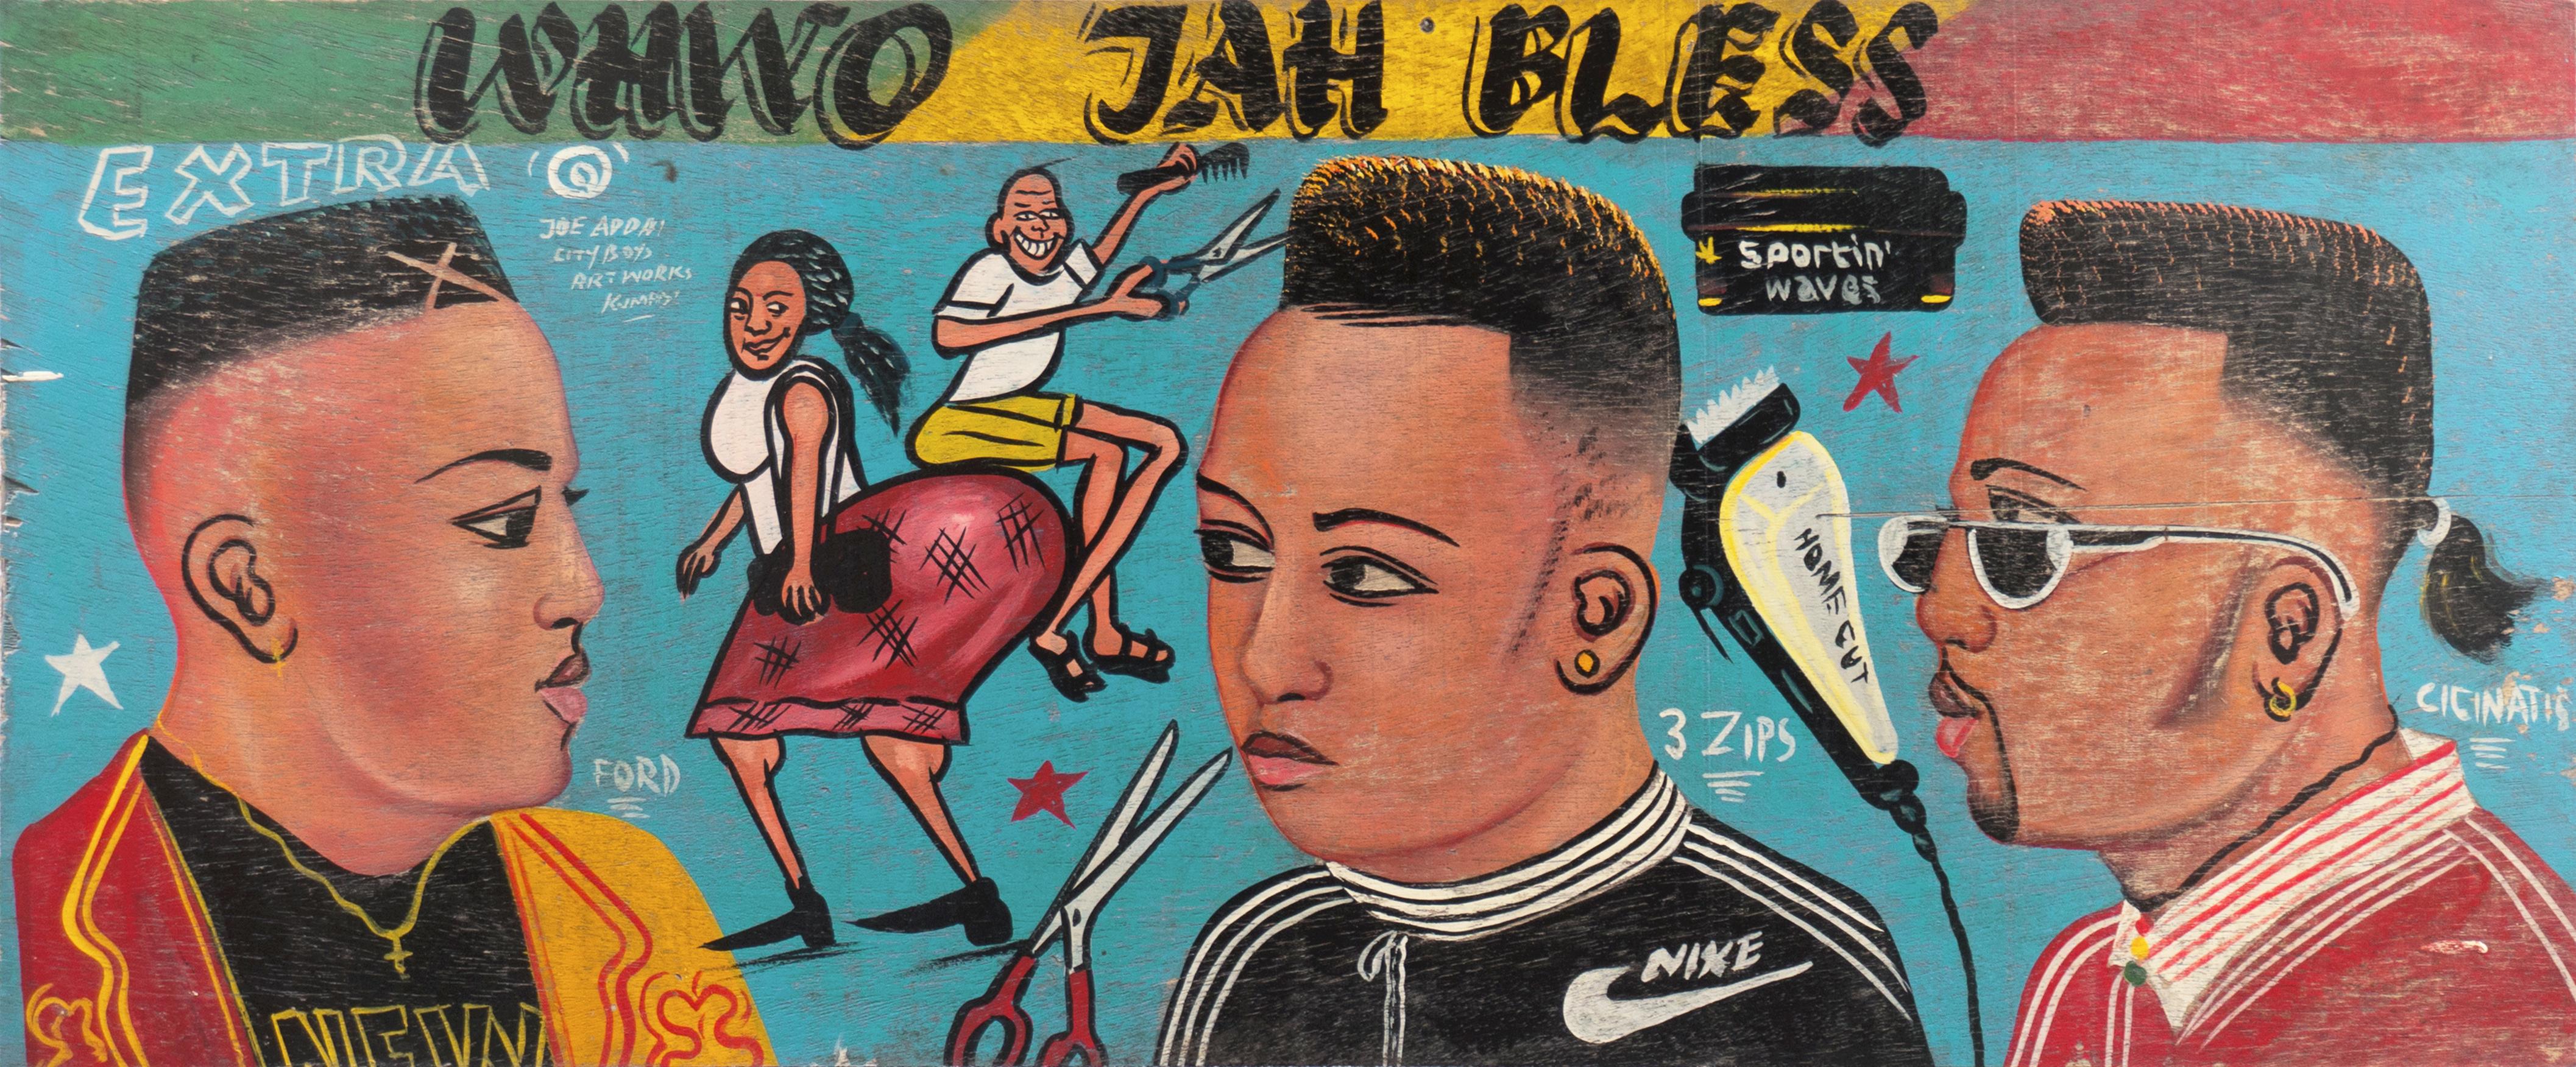 Joe Addai Figurative Painting - 'Barbershop Designs', Kumasi, Accra, Ghana, Jah Bless, African Hair Styles, Folk